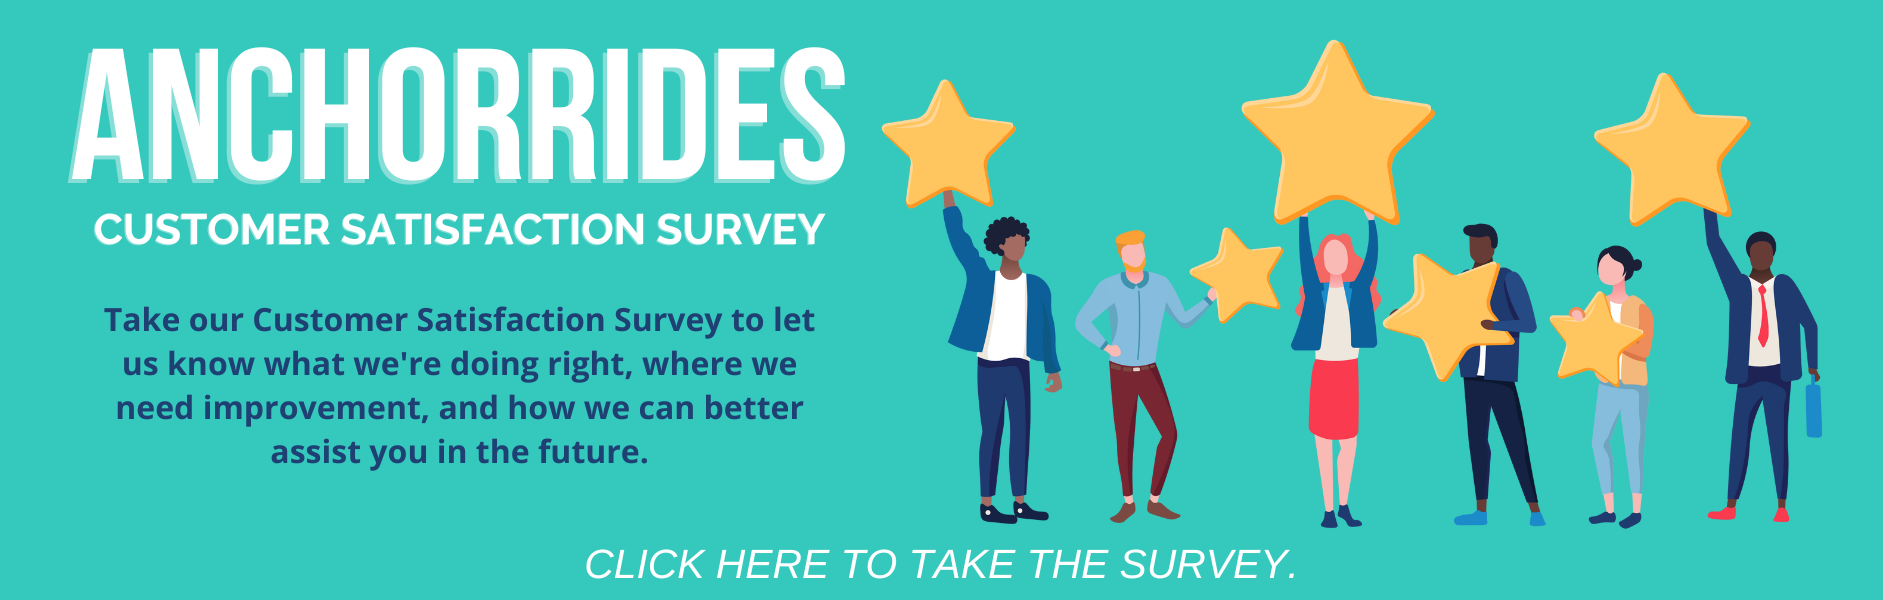 AnchorRIDES Customer Satisfaction Survey Banner